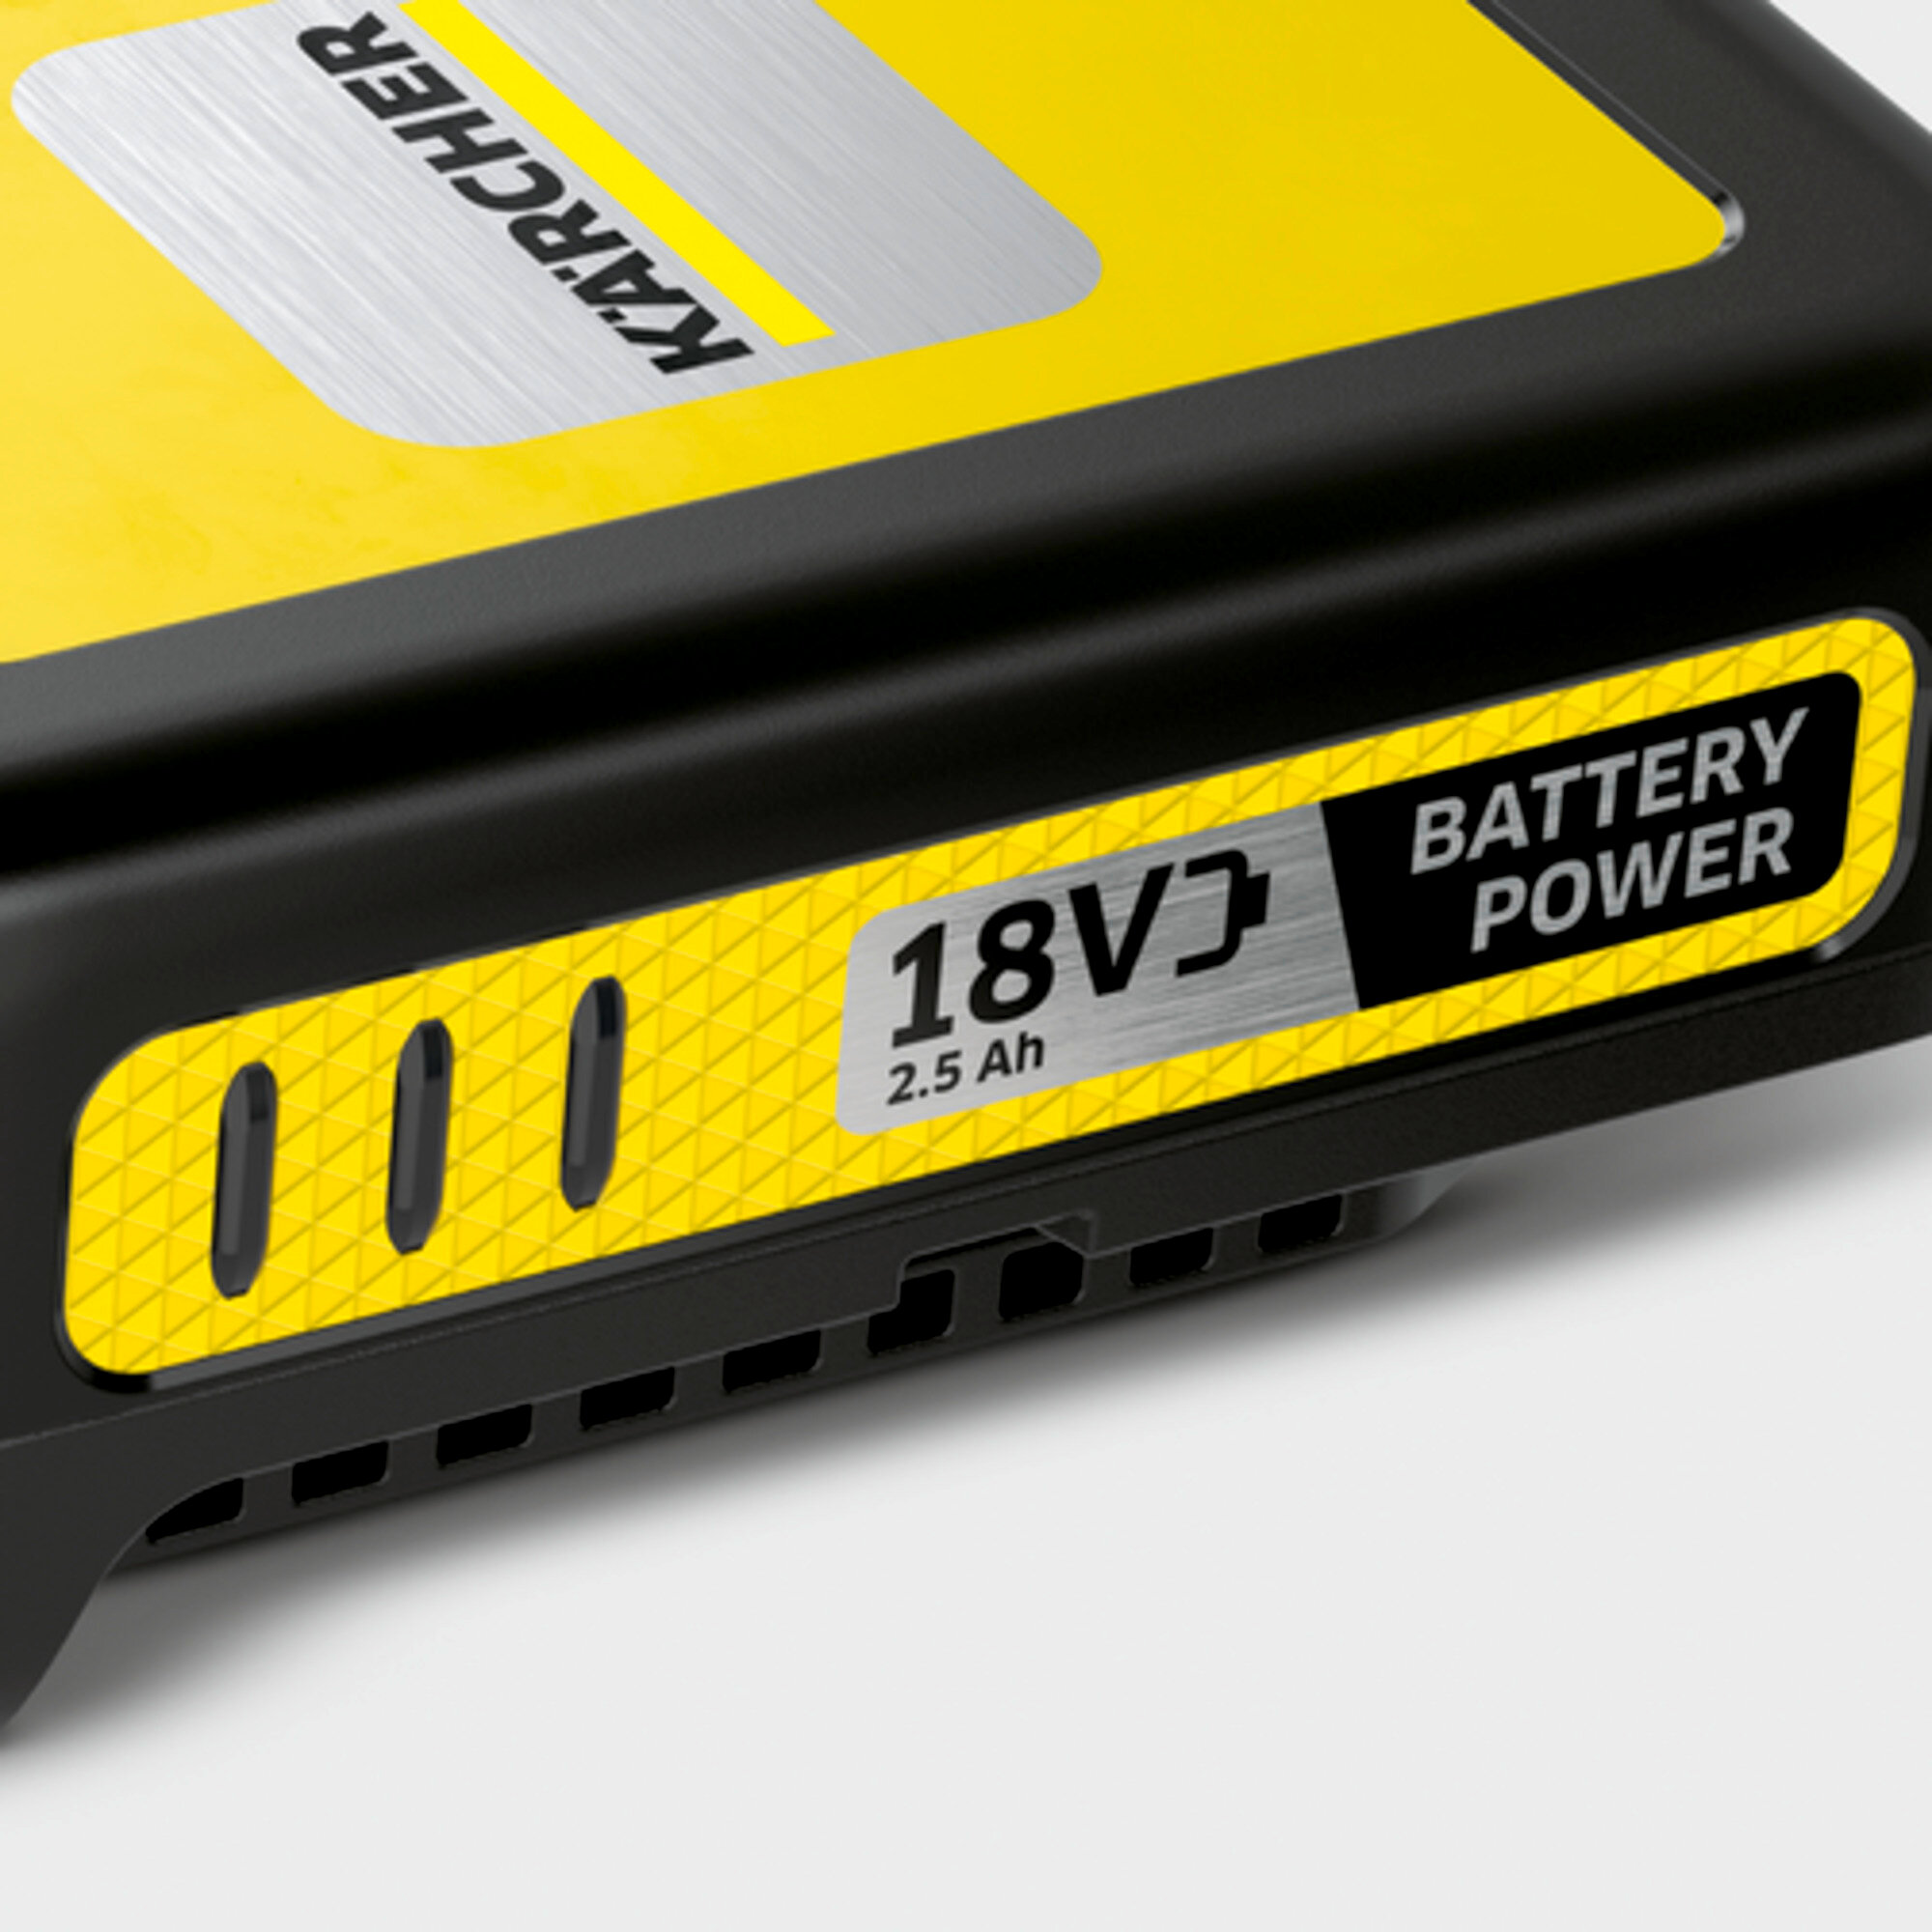 Kit de démarrage Battery Power 18/25 : 18 V Batterie échangeable Kärcher Battery Power